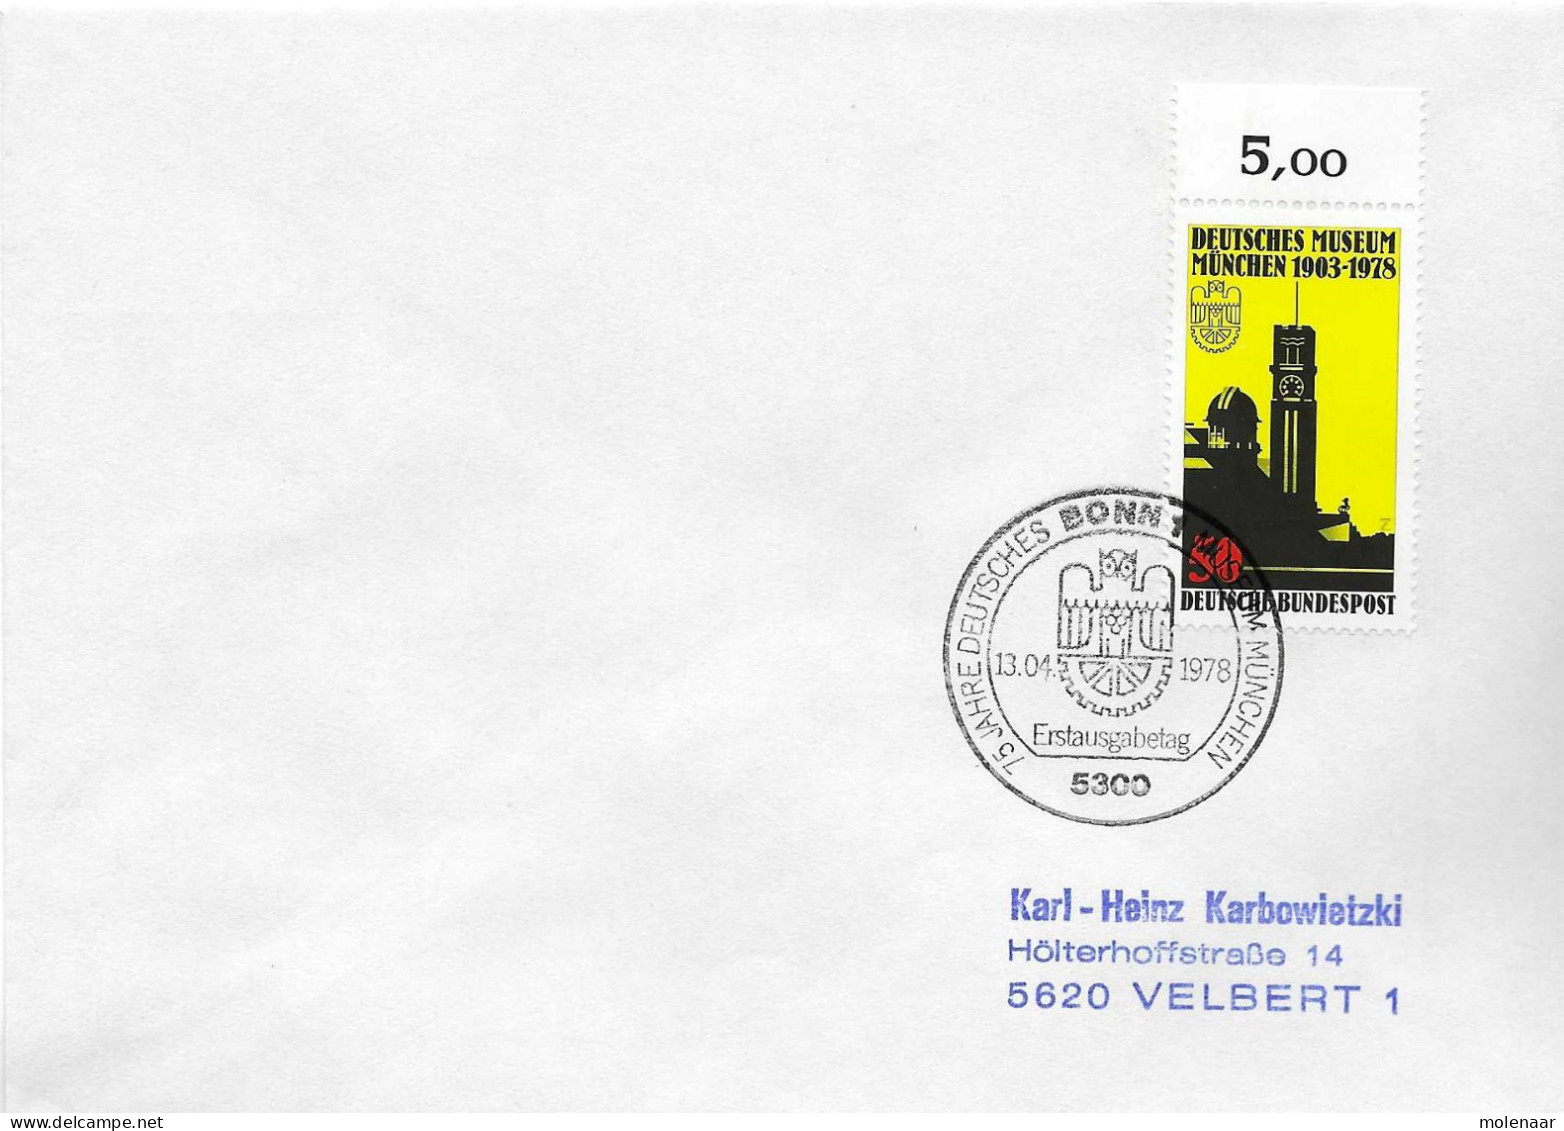 Postzegels > Europa > Duitsland > West-Duitsland > 1970-1979 > Brief Met No. 963 (17372) - Covers & Documents